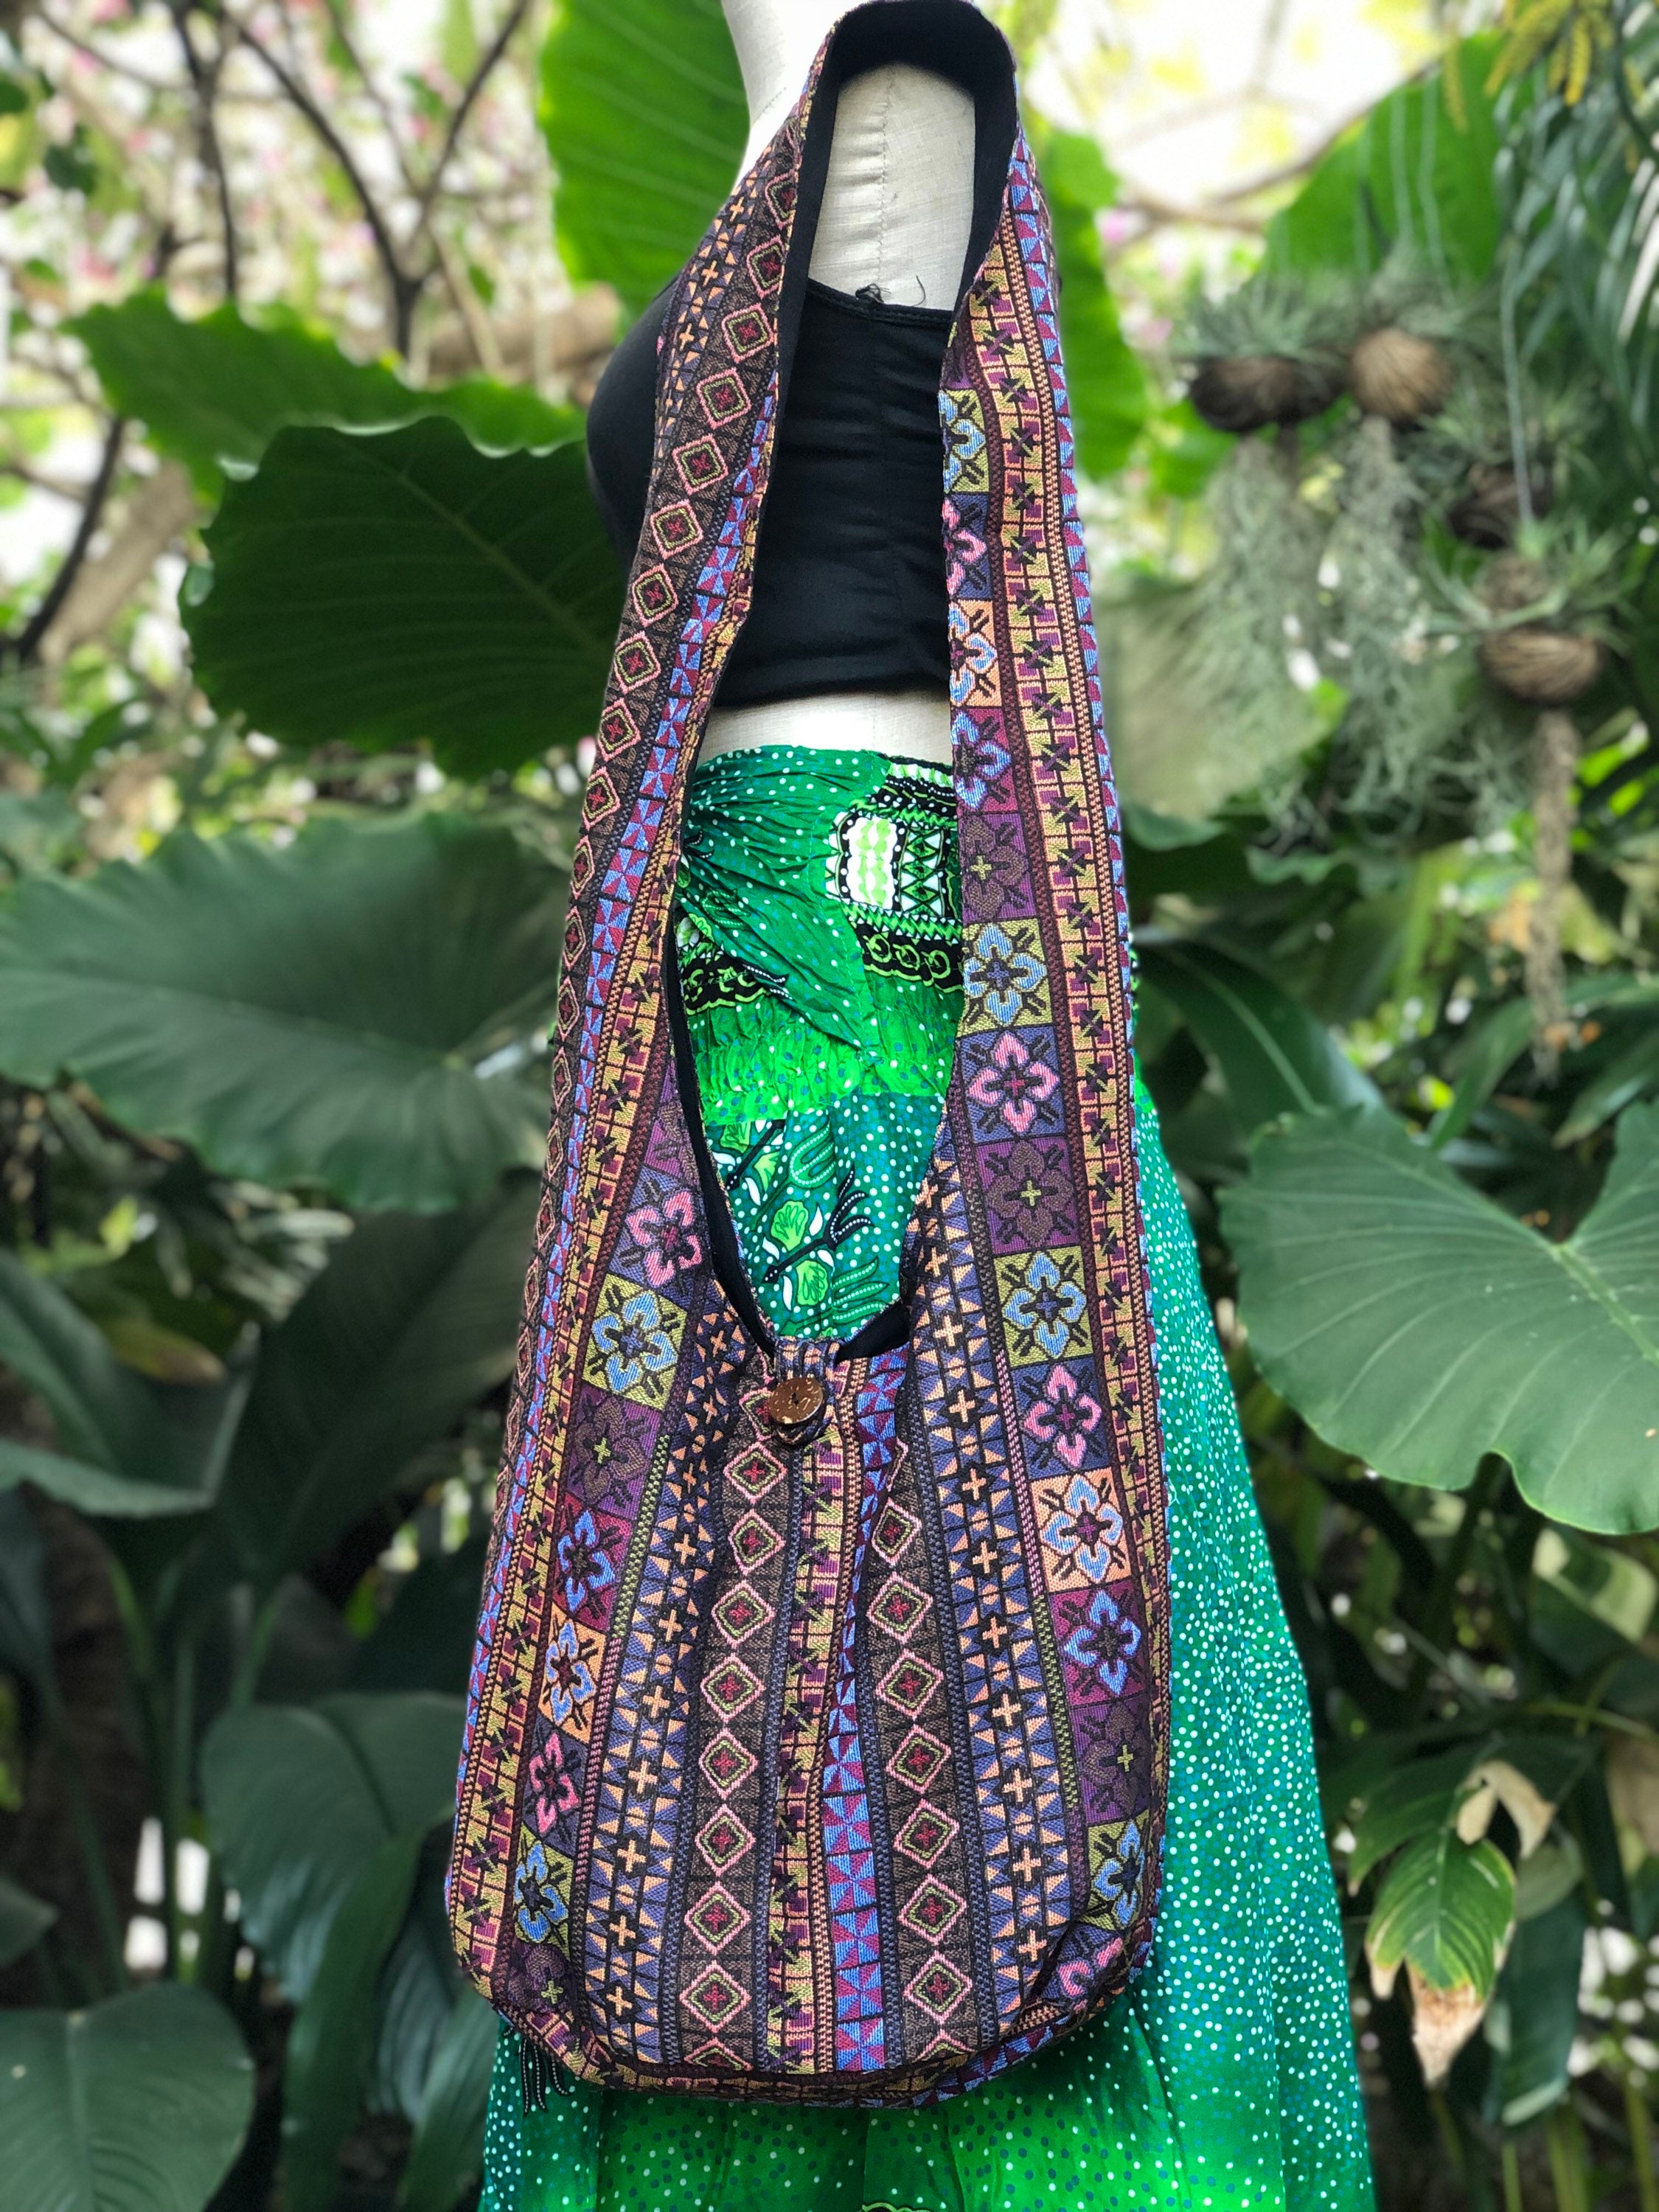 Crossbody Bag Tribal Boho Bag Sling Bag Hippies Ikat Aztec Style Hobo Yam Tote Messager Hand Woven Nepali Neural Fabric Men Women Vegan Gift